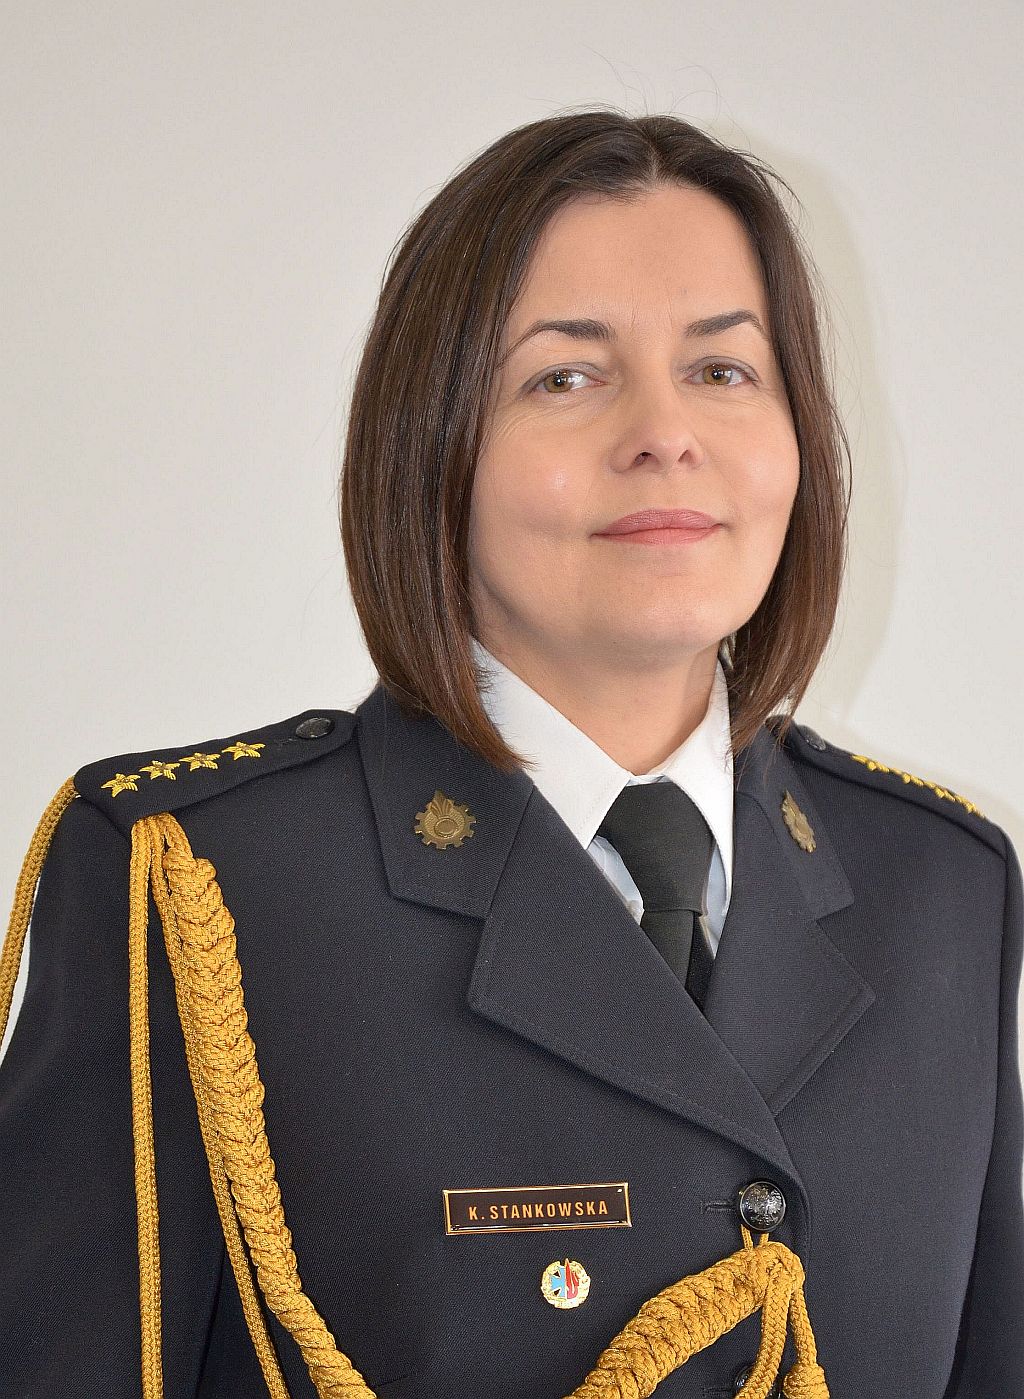 Karina Stankowska